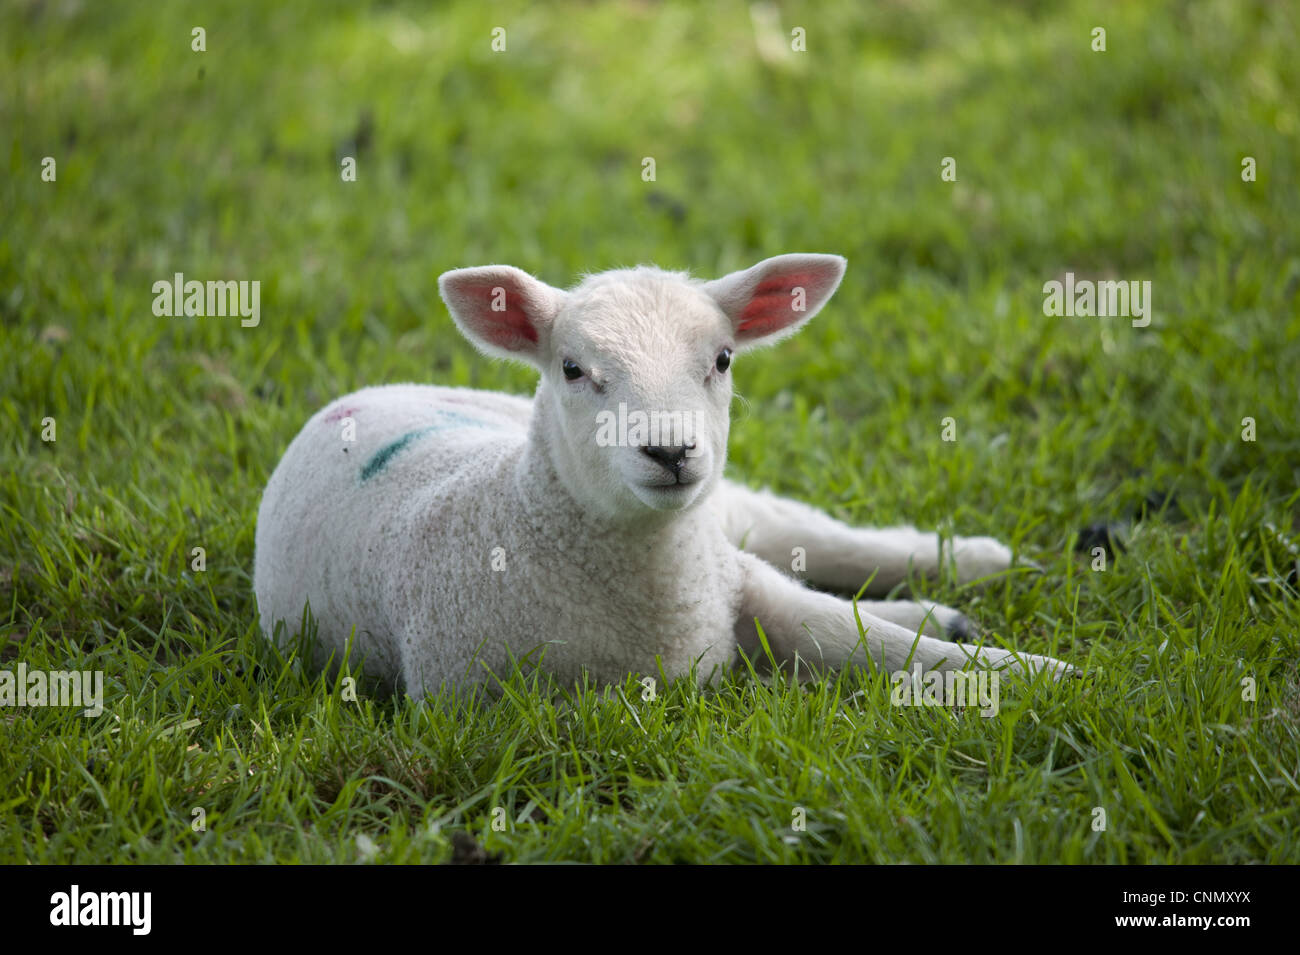 Hausschafe, Texel Kreuz Lamm, ruht auf der Weide, Chipping, Lancashire, England, april Stockfoto